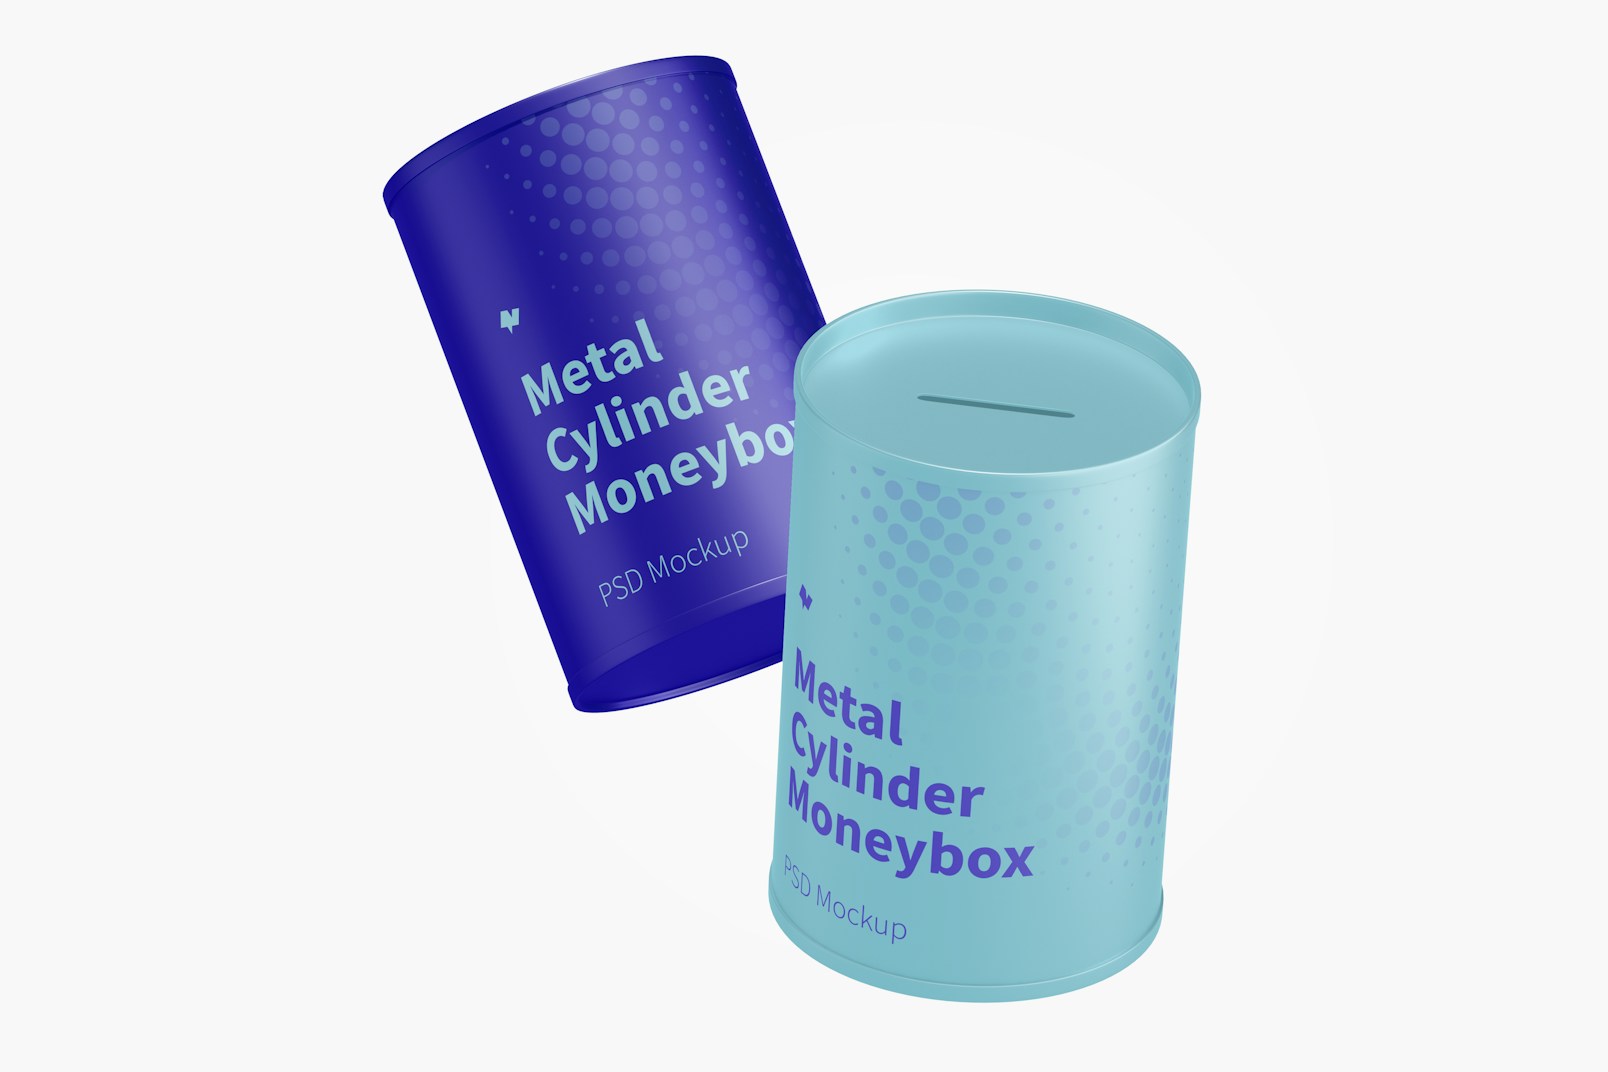 Metal Cylinder Moneybox Mockup, Floating